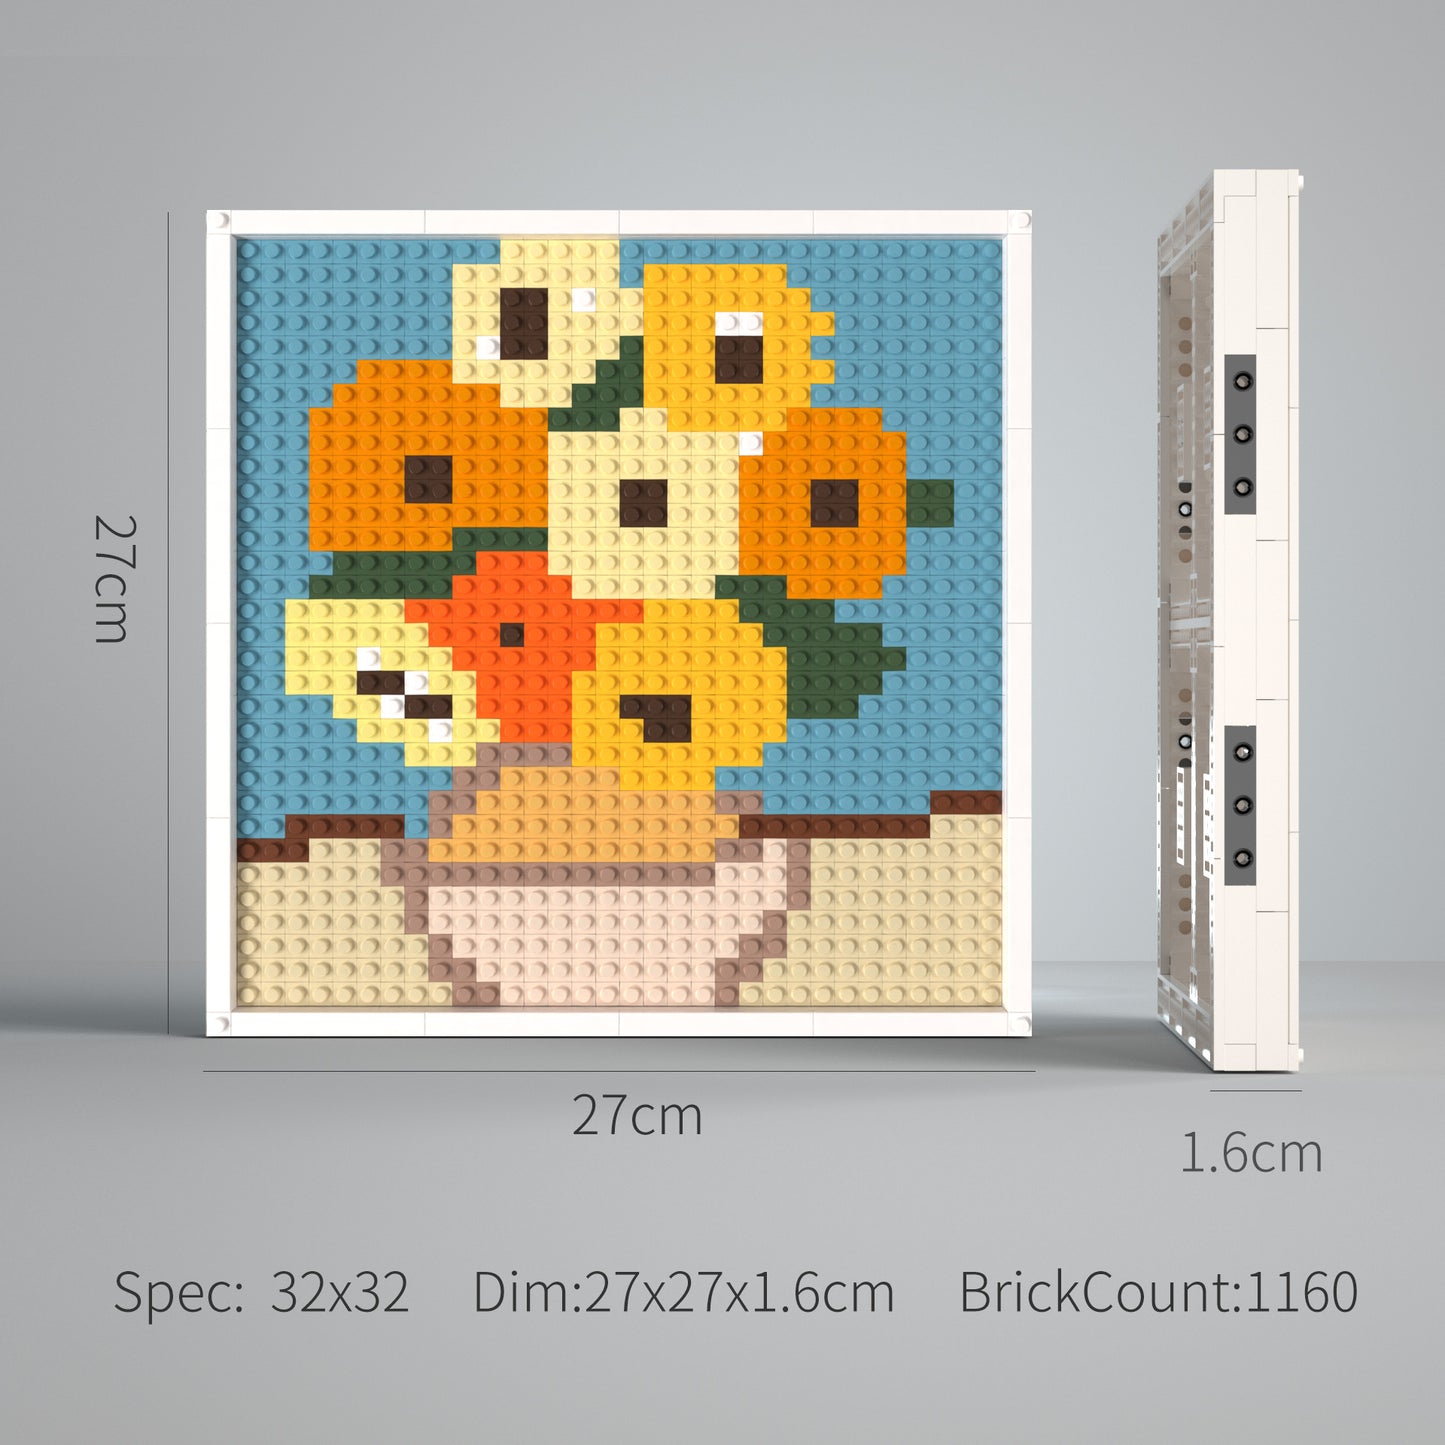 Van Gogh Sunflowers Building Brick Pixel Art - 32*32 Modular Compatible with Lego